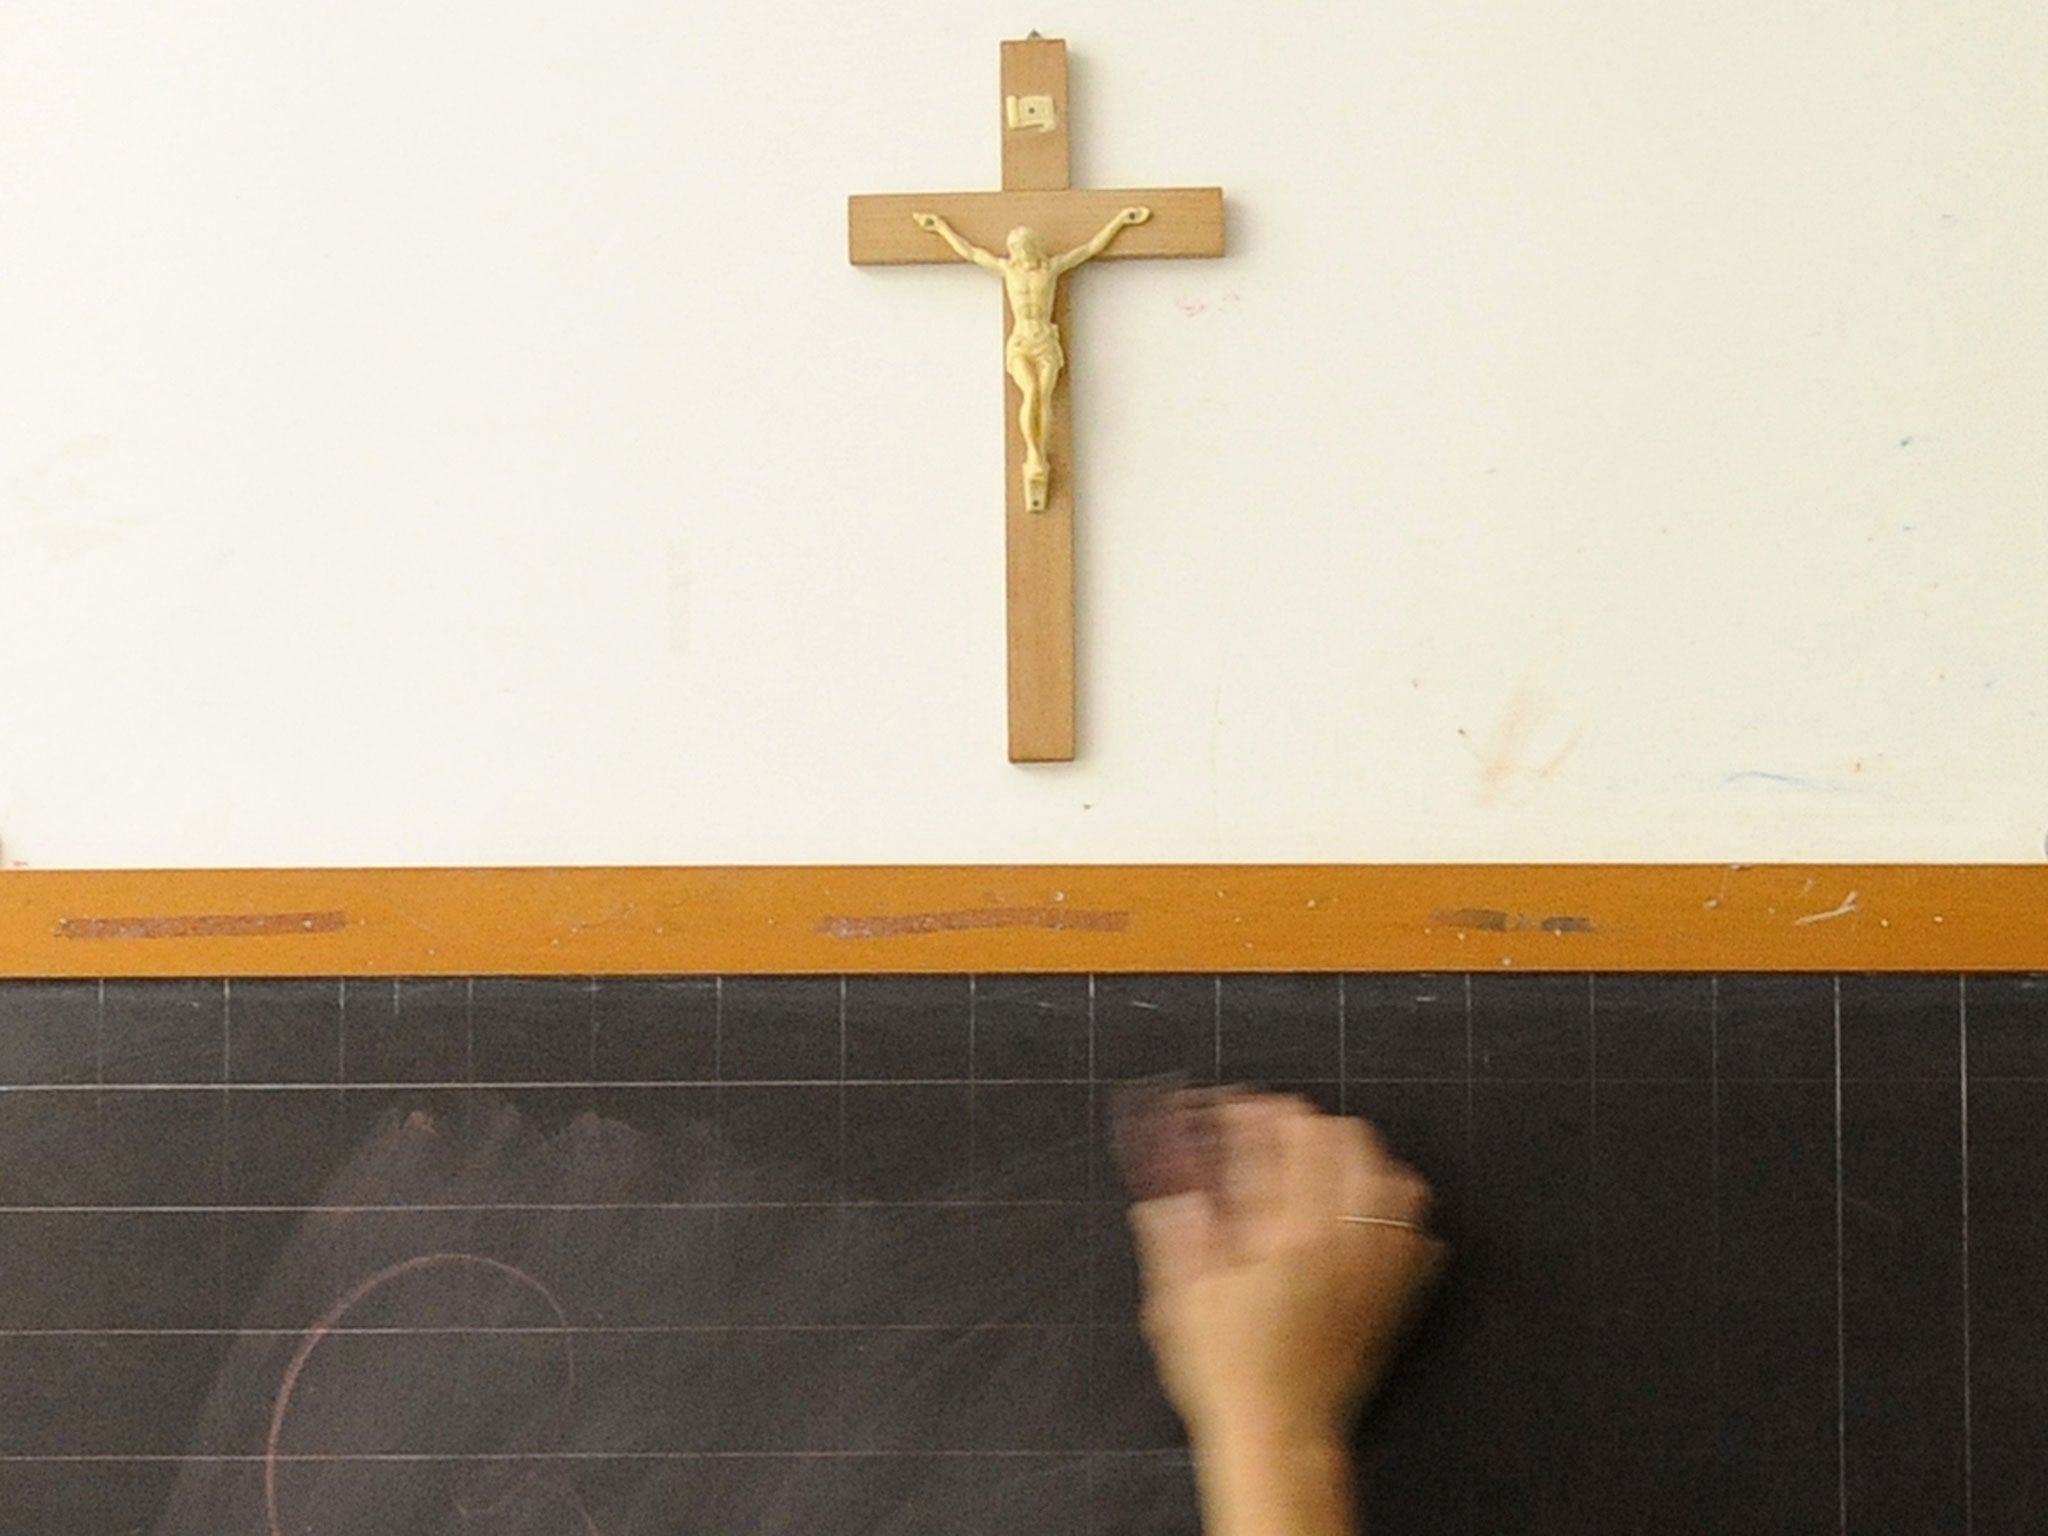 Do faith schools encourage or discourage free thought?